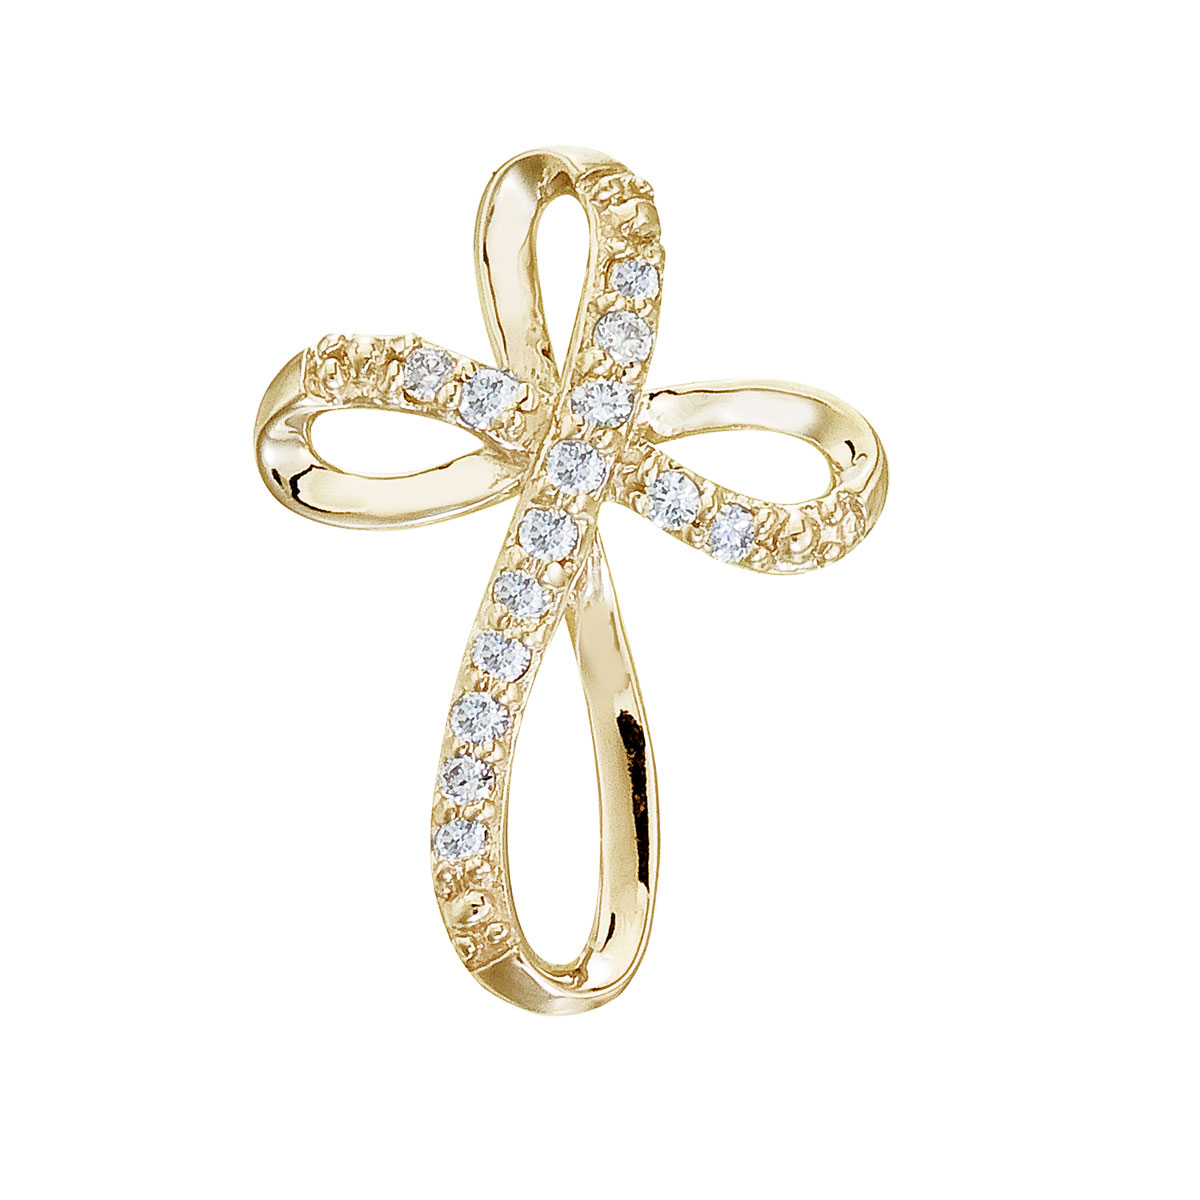 JCX2998: 14k yellow gold cross pendant with shimmering diamonds.